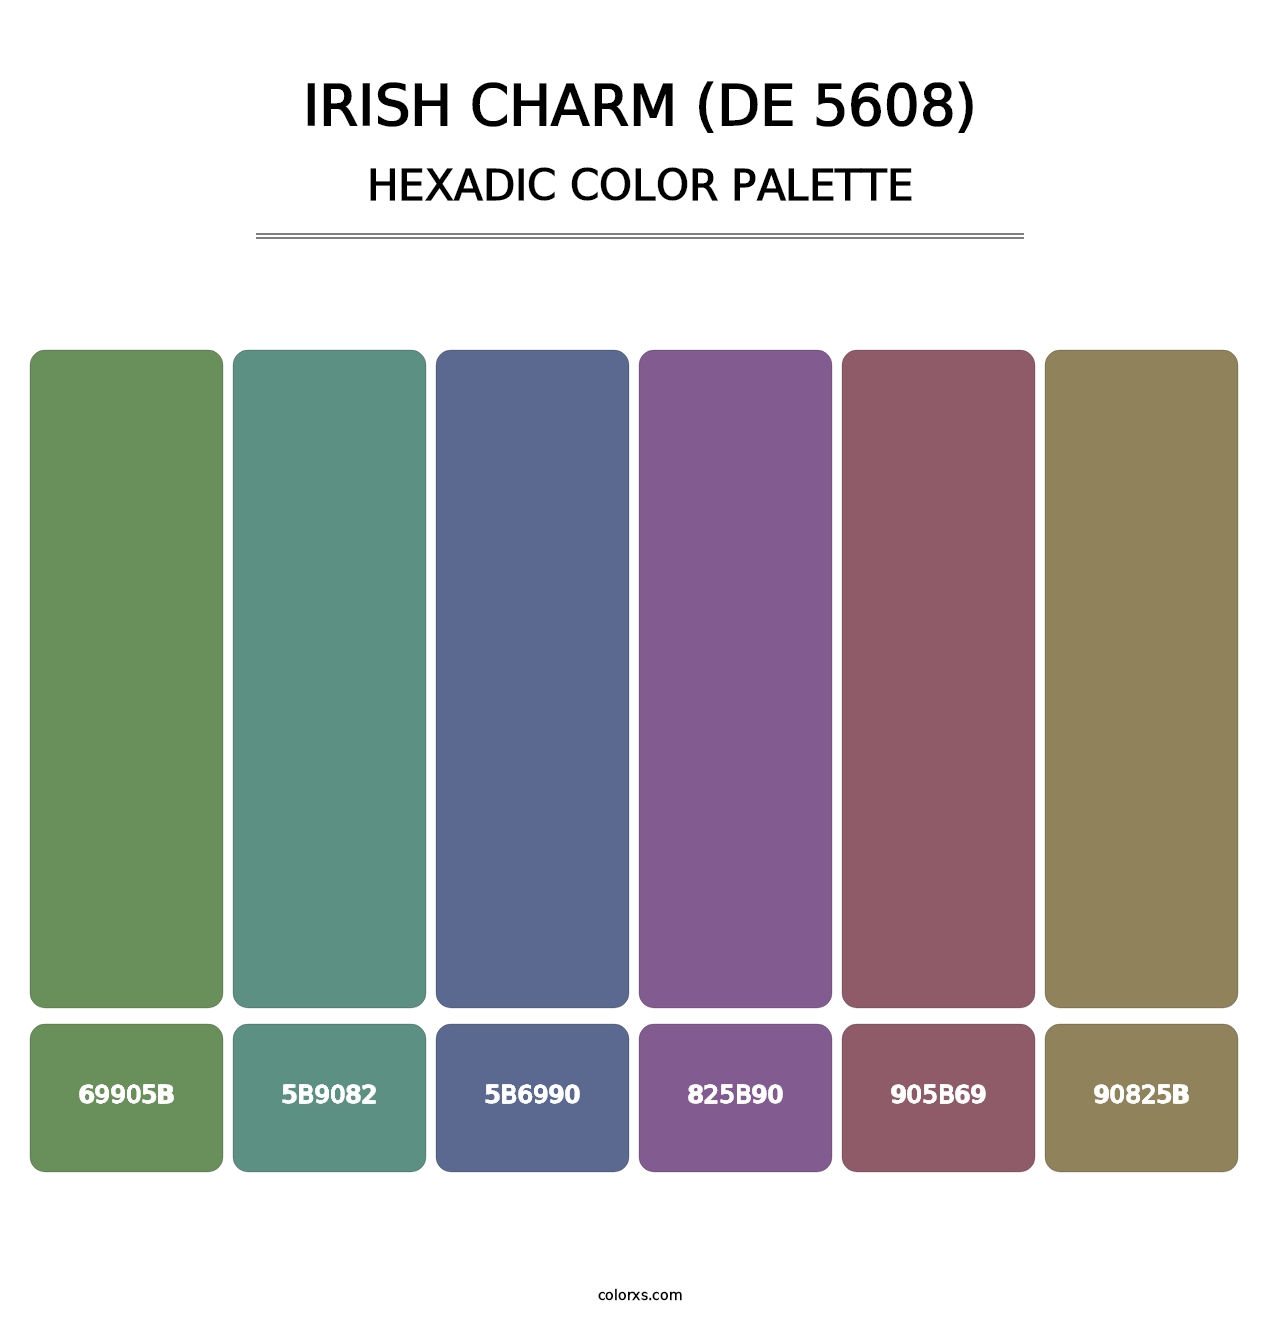 Irish Charm (DE 5608) - Hexadic Color Palette